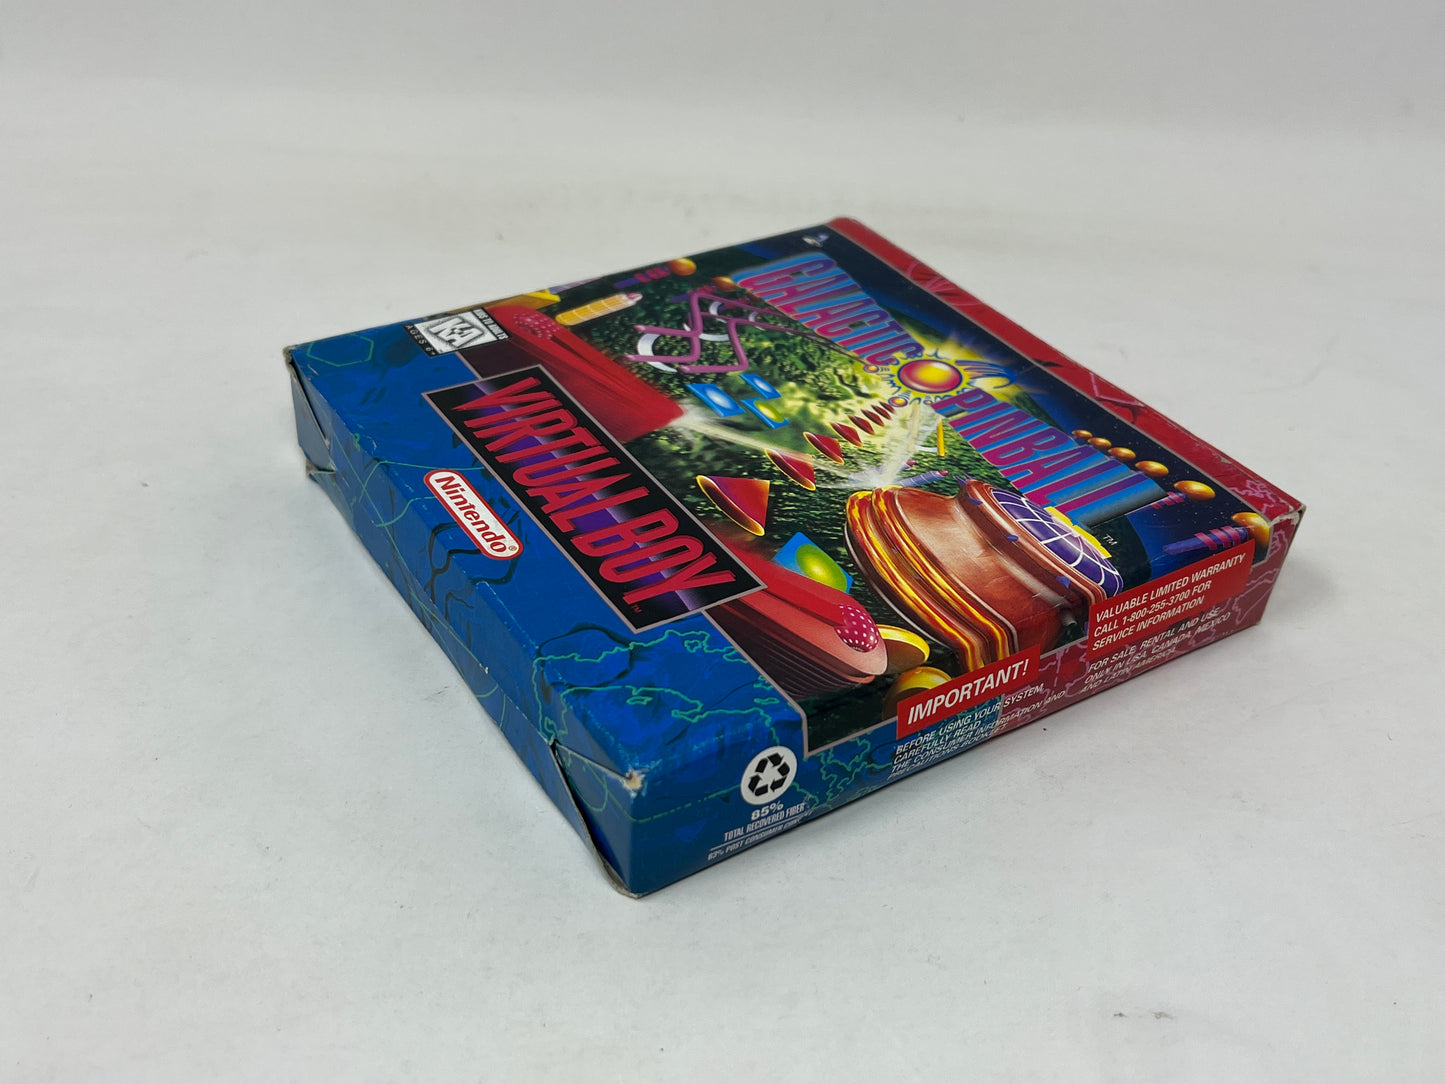 Nintendo Virtual Boy - Galactic Pinball - Complete